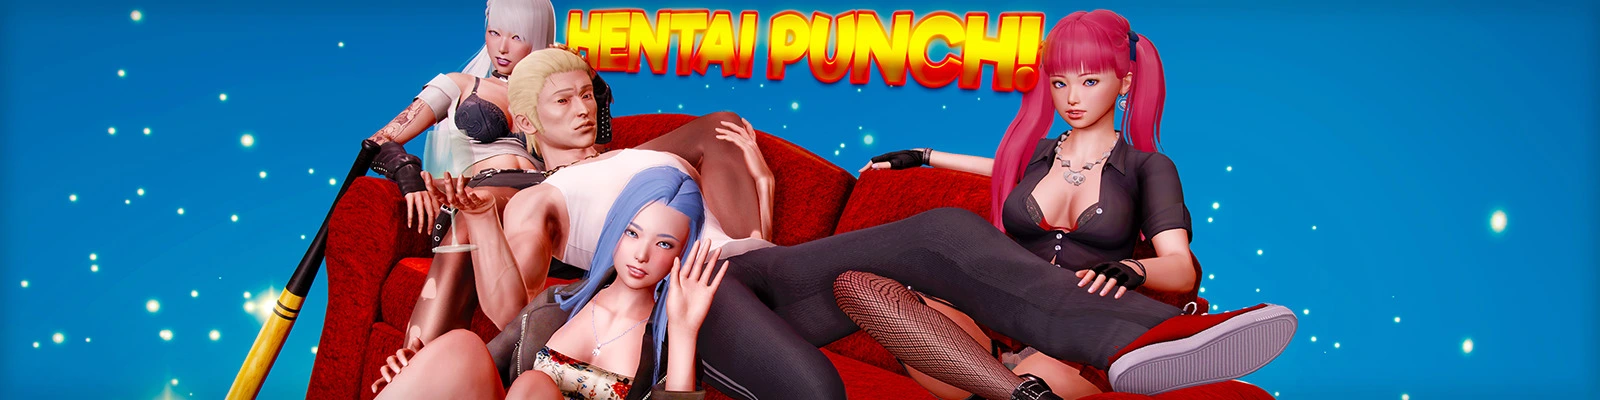 Hentai Punch! [v0.1.1] main image